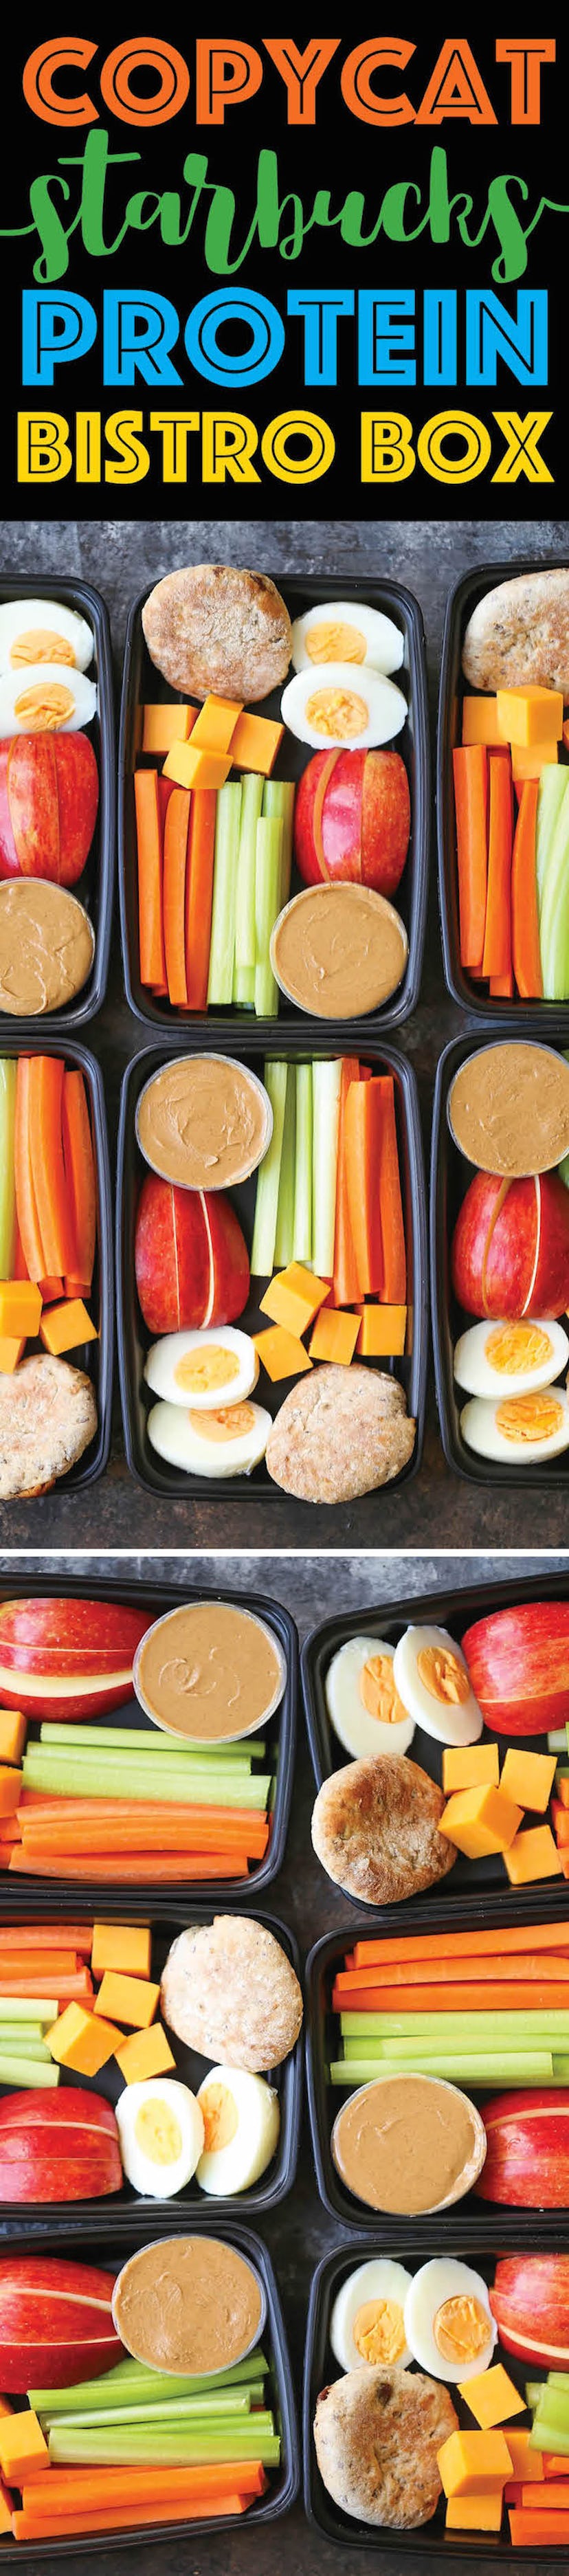 toddler lunch box: copycat Starbucks protein box